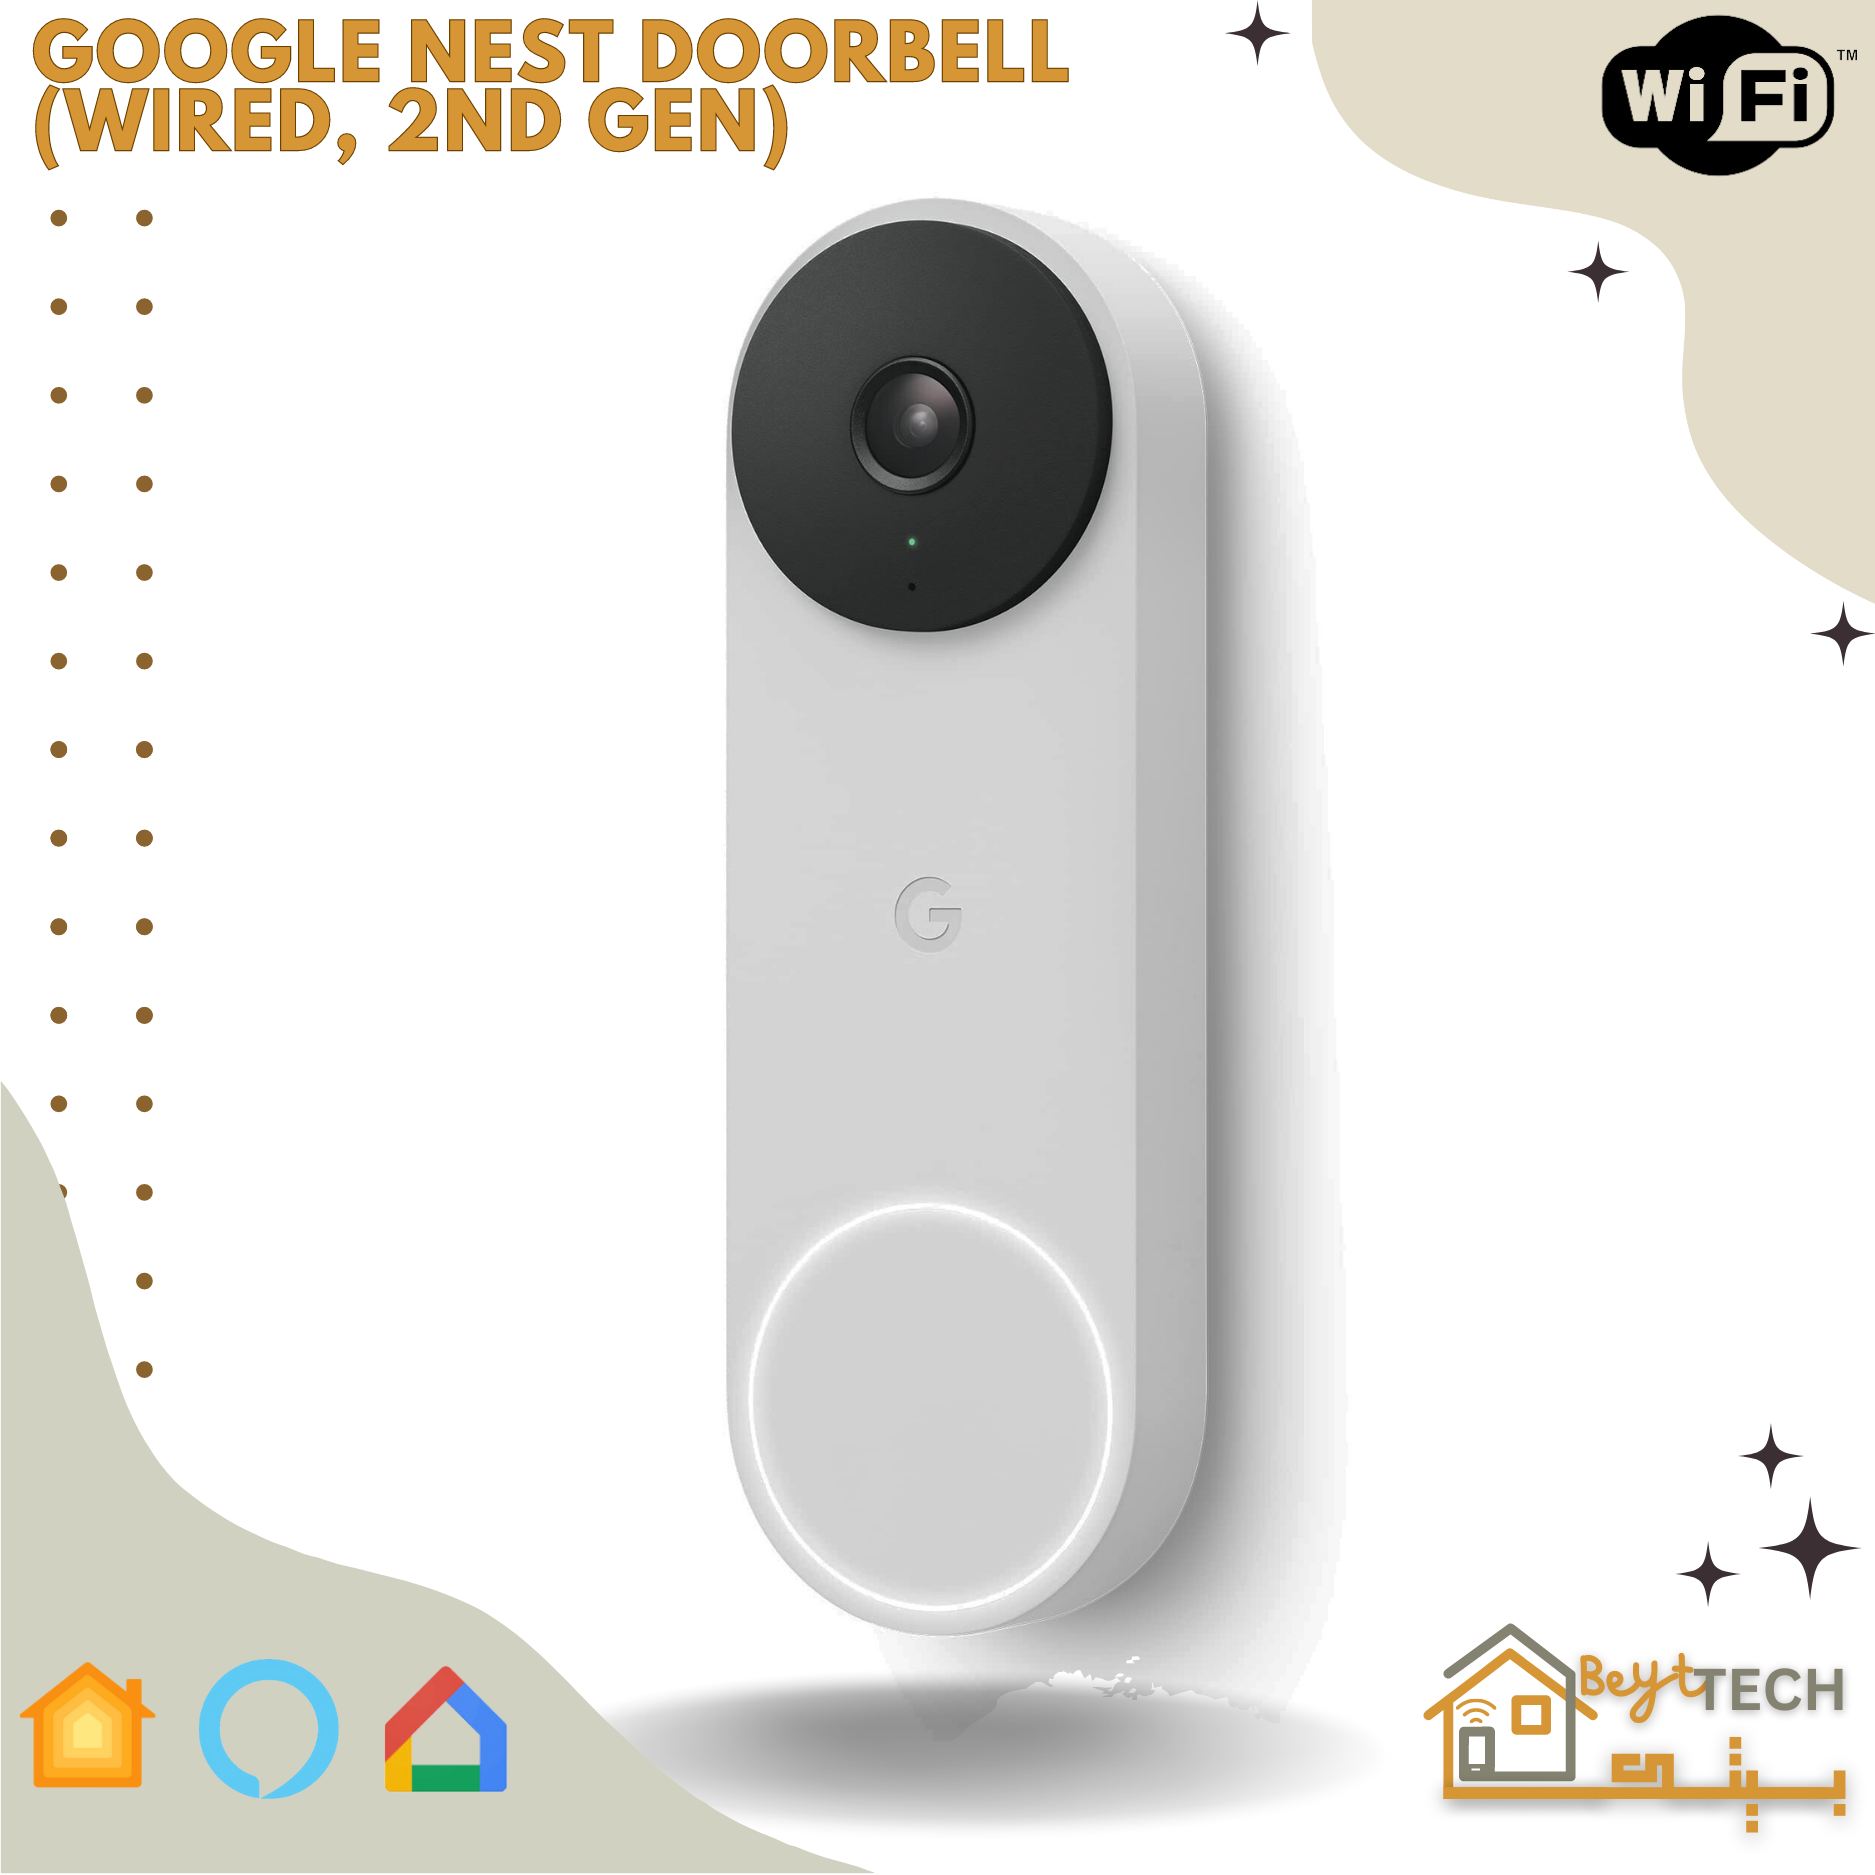 Nest Doorbell (wired, 2nd gen) review